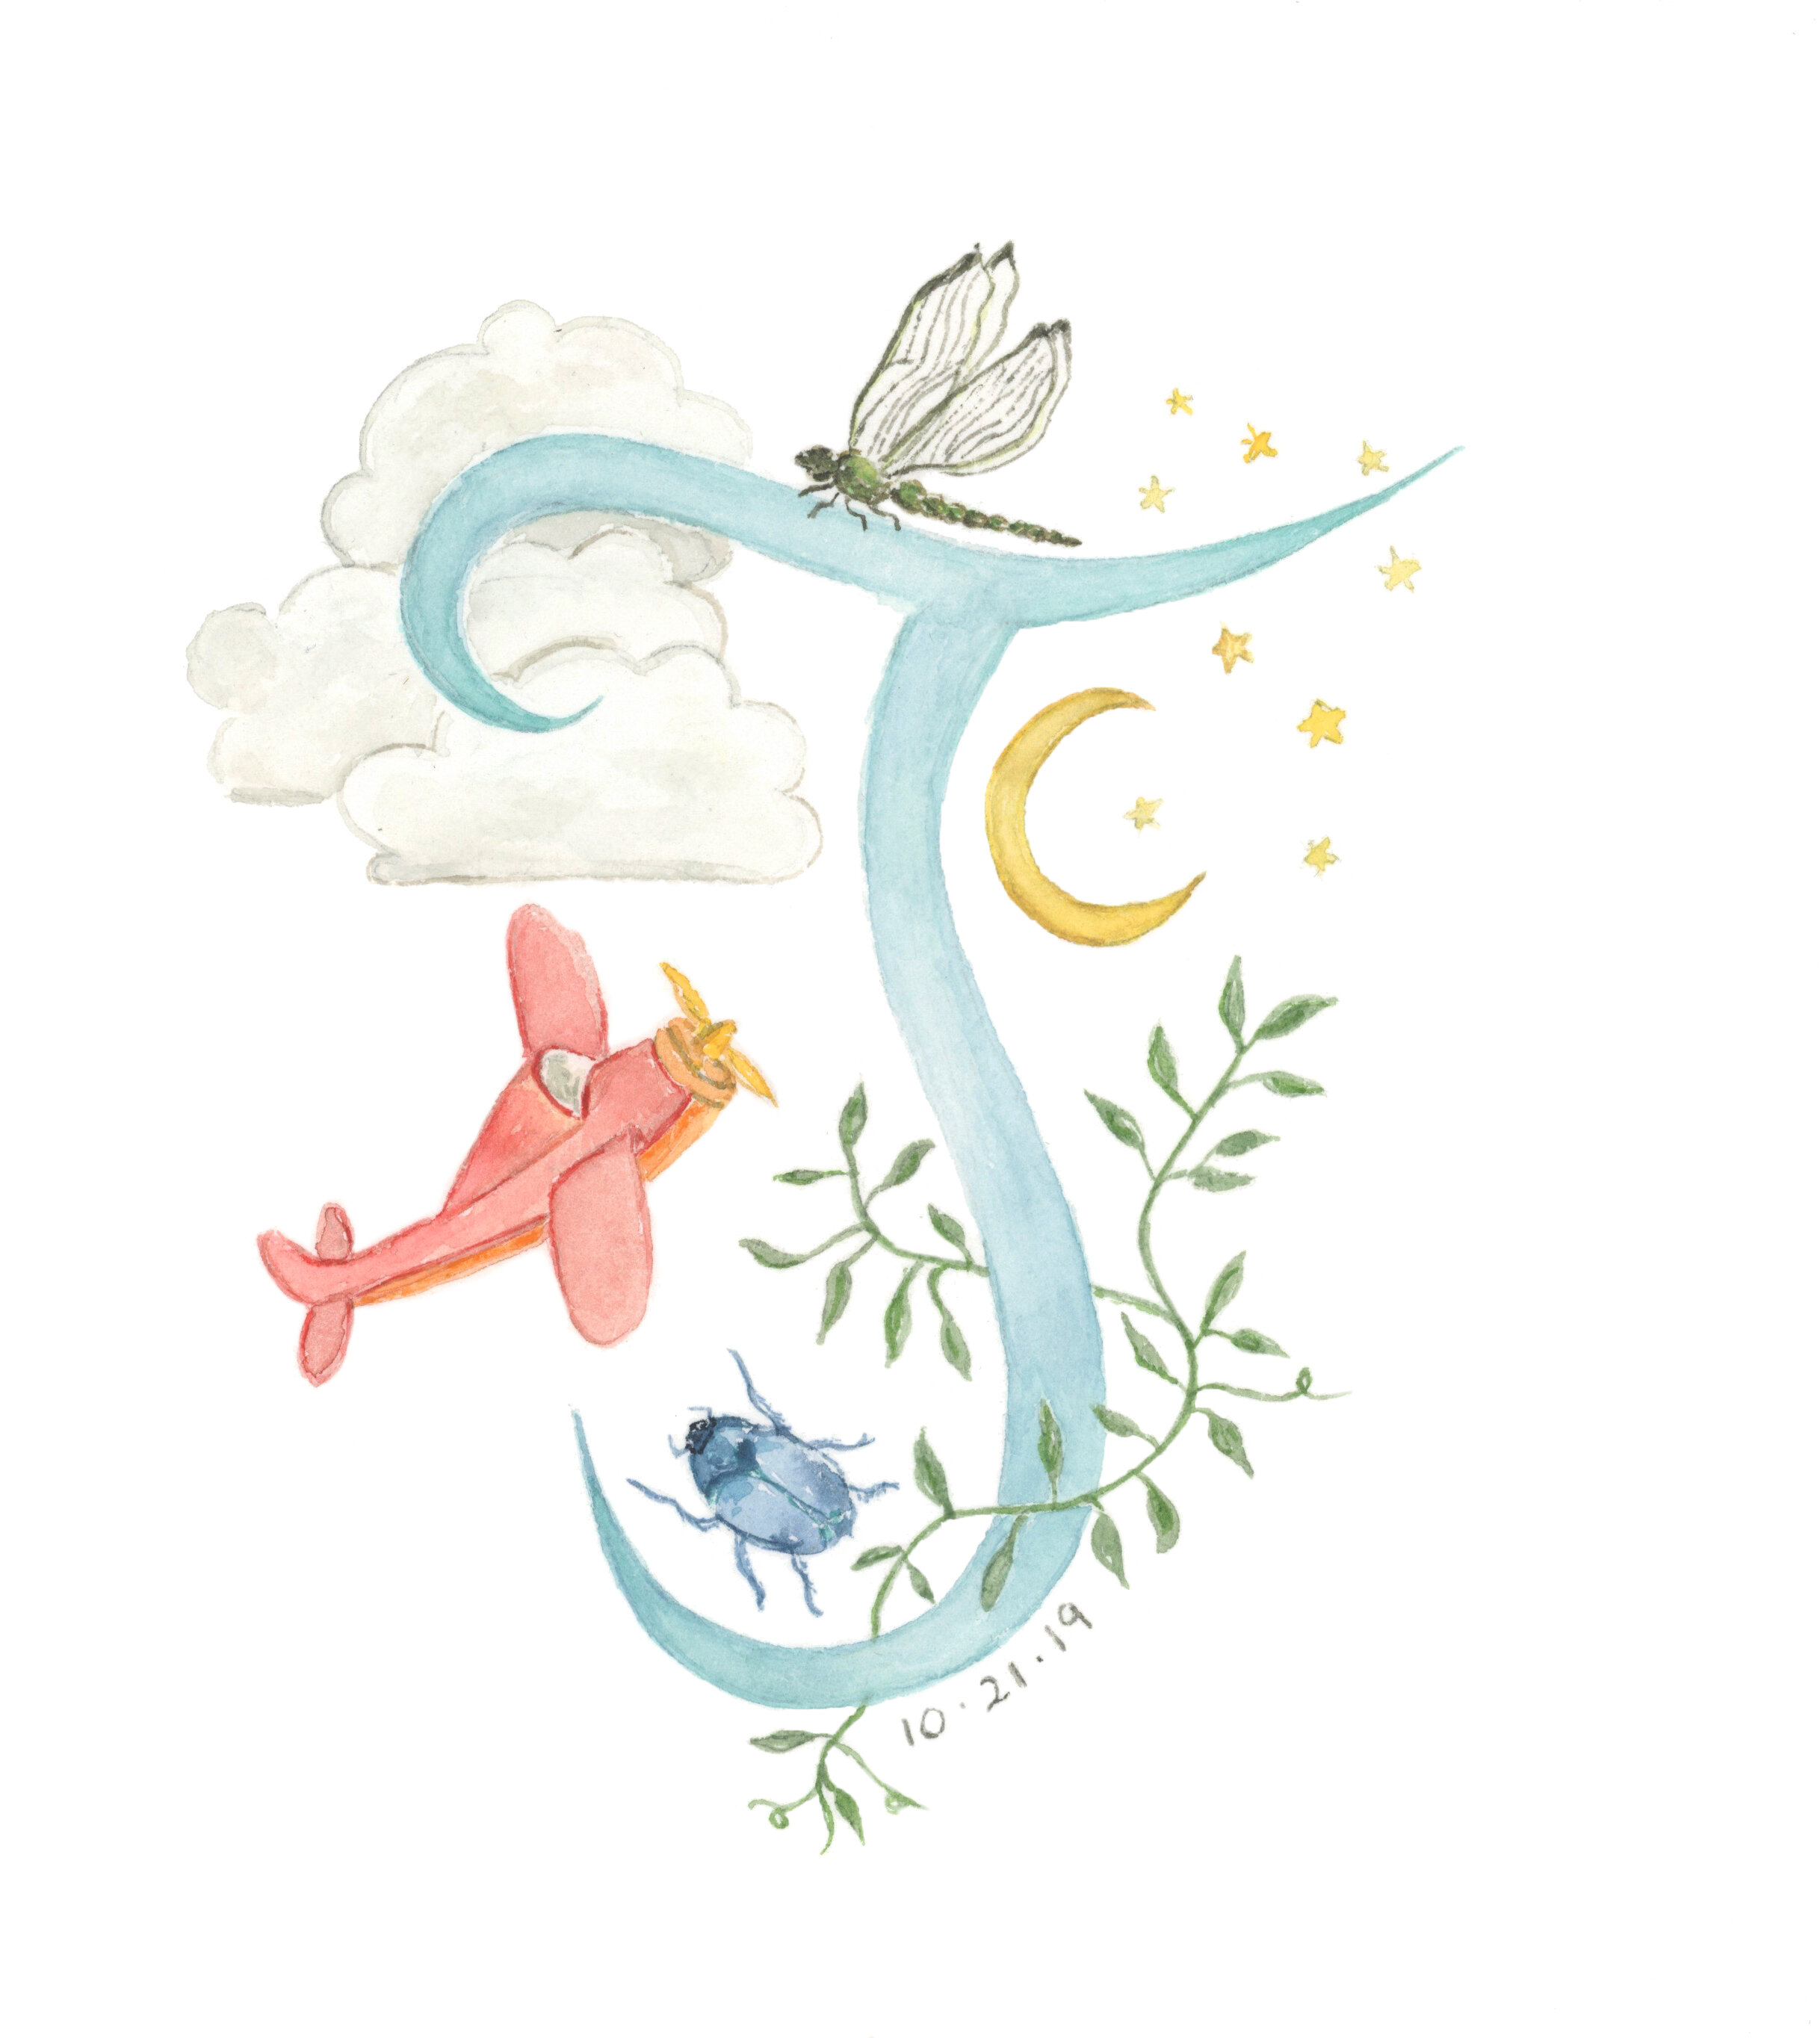 Illustrated watercolor nursery emblem